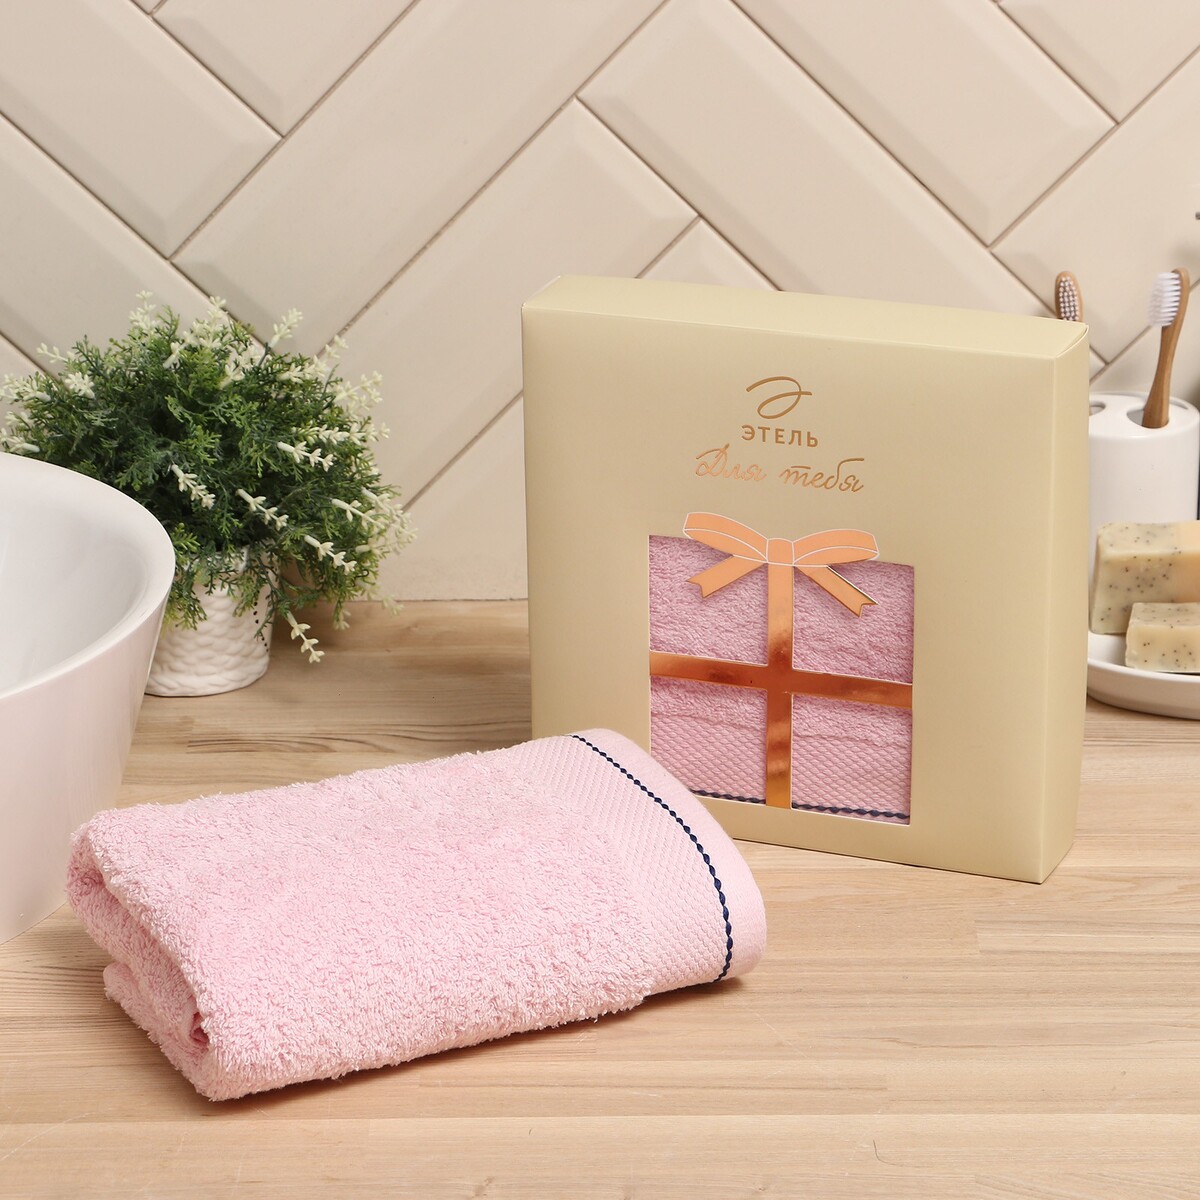 Полотенце полотенце в коробке этель для тебя 50х90 см розовый 100% хлопок 450 гр м2